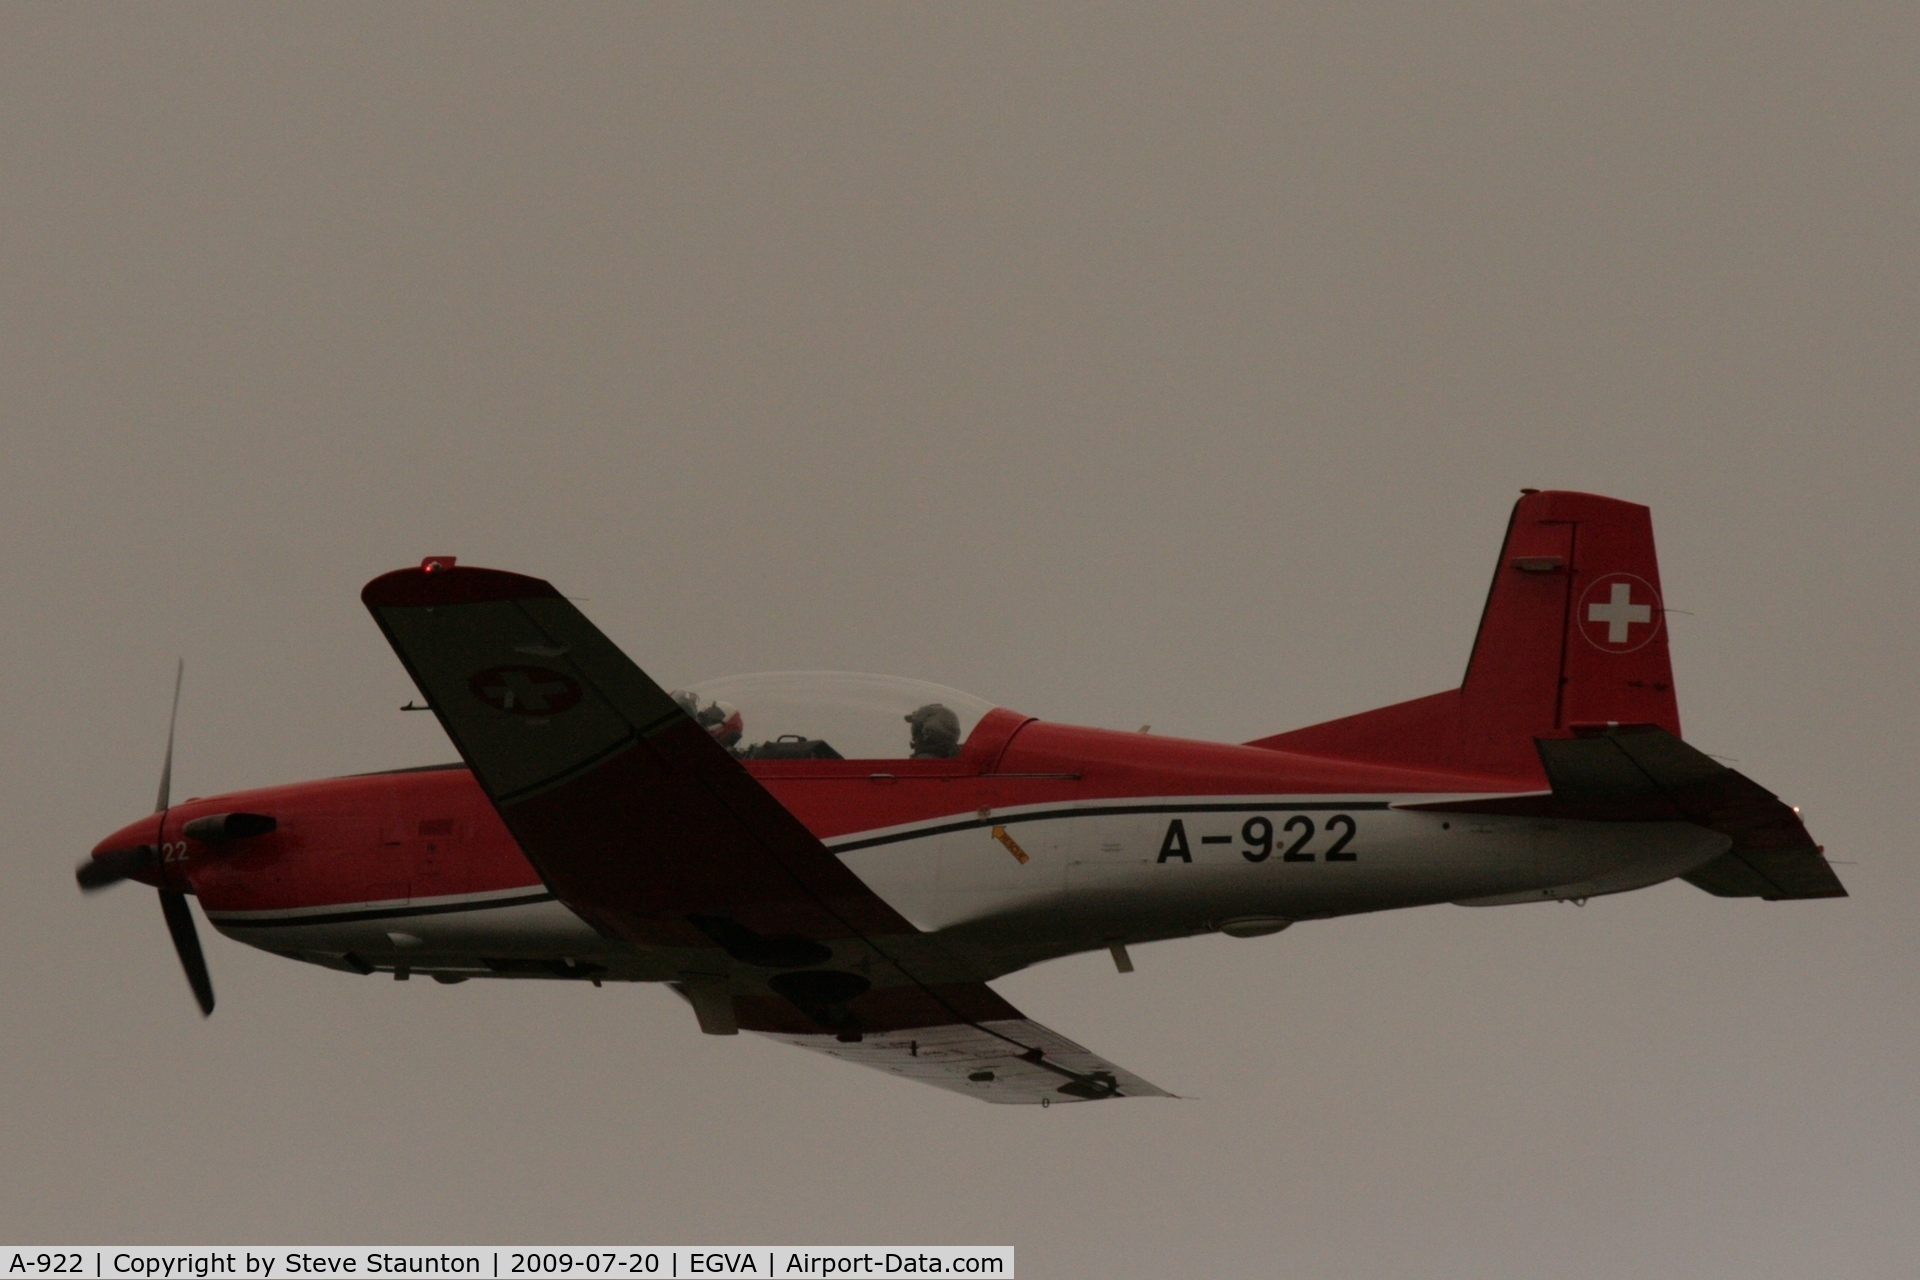 A-922, 1983 Pilatus PC-7 Turbo Trainer C/N 330, Taken at the Royal International Air Tattoo 2009